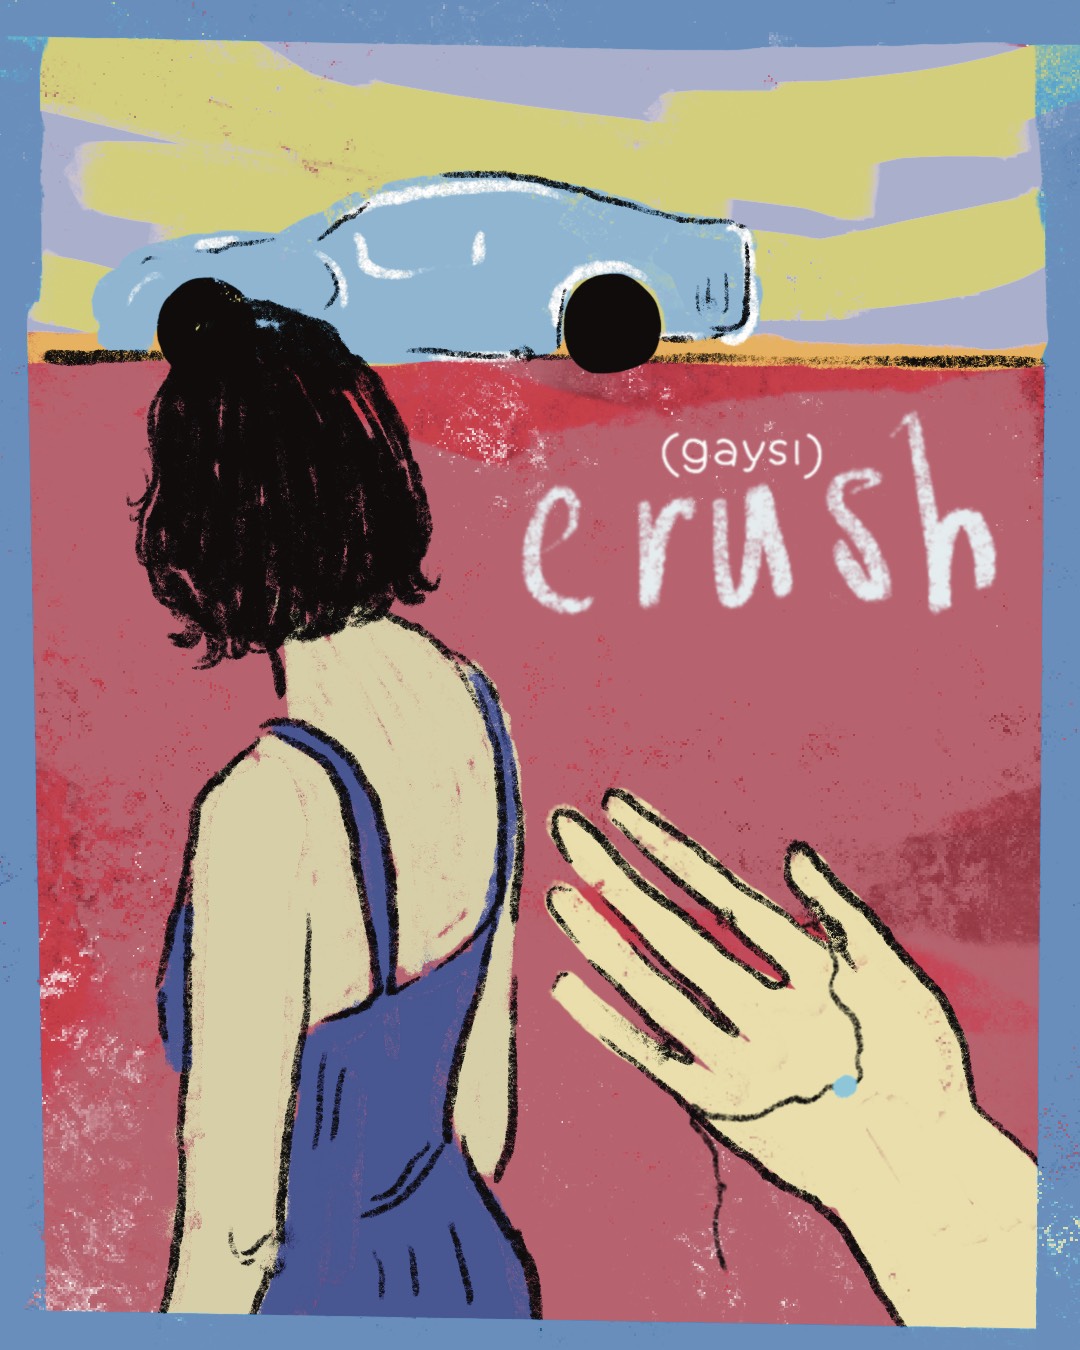 Crush (Part 2)